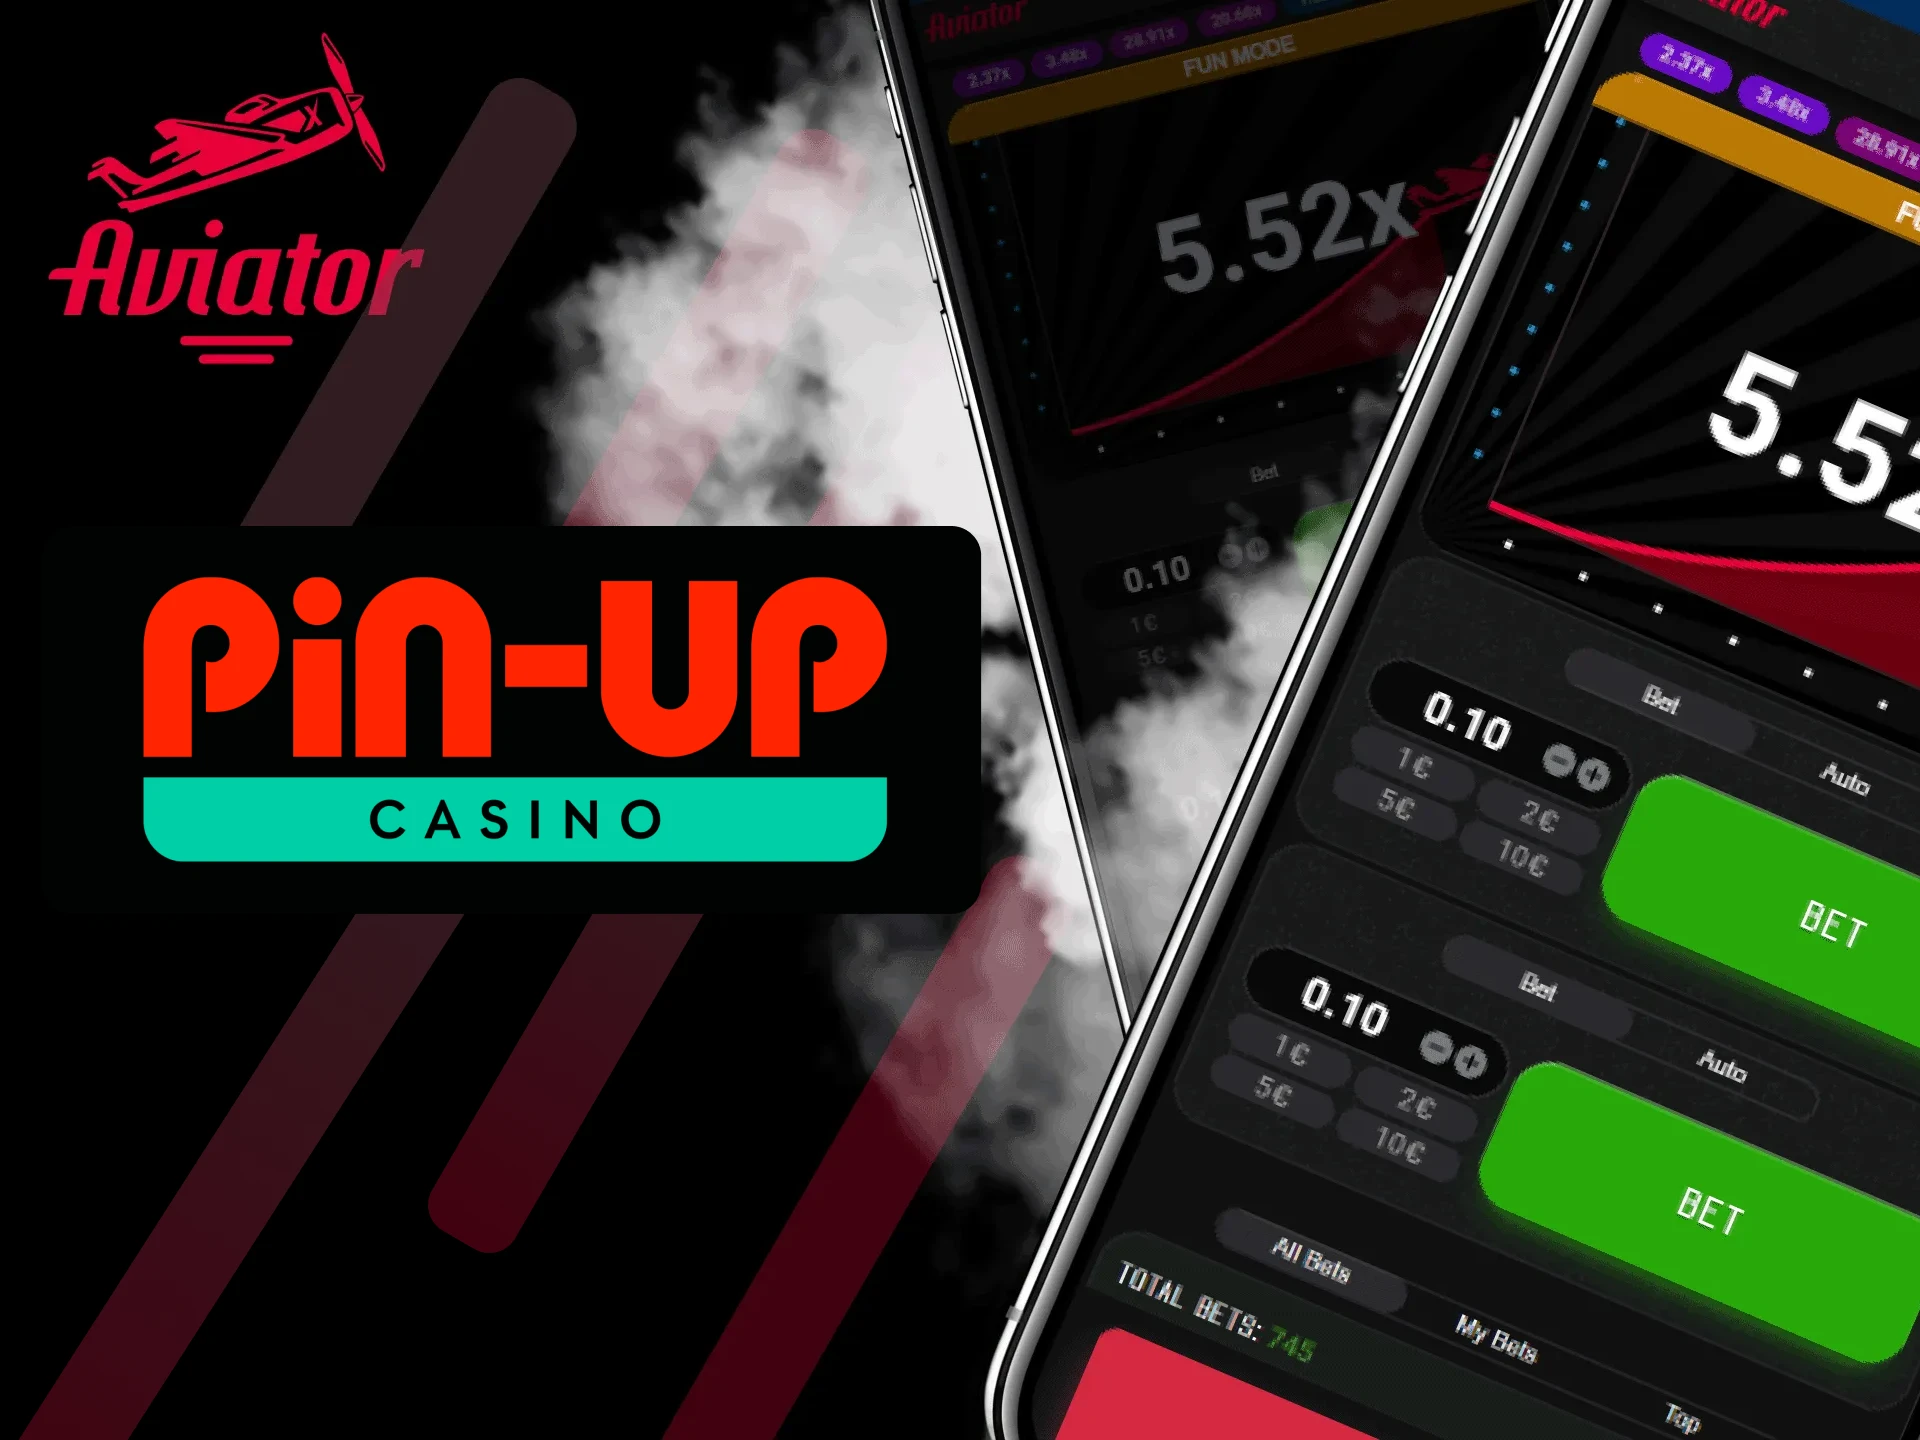 Play Aviator in the Pin Up casino app.